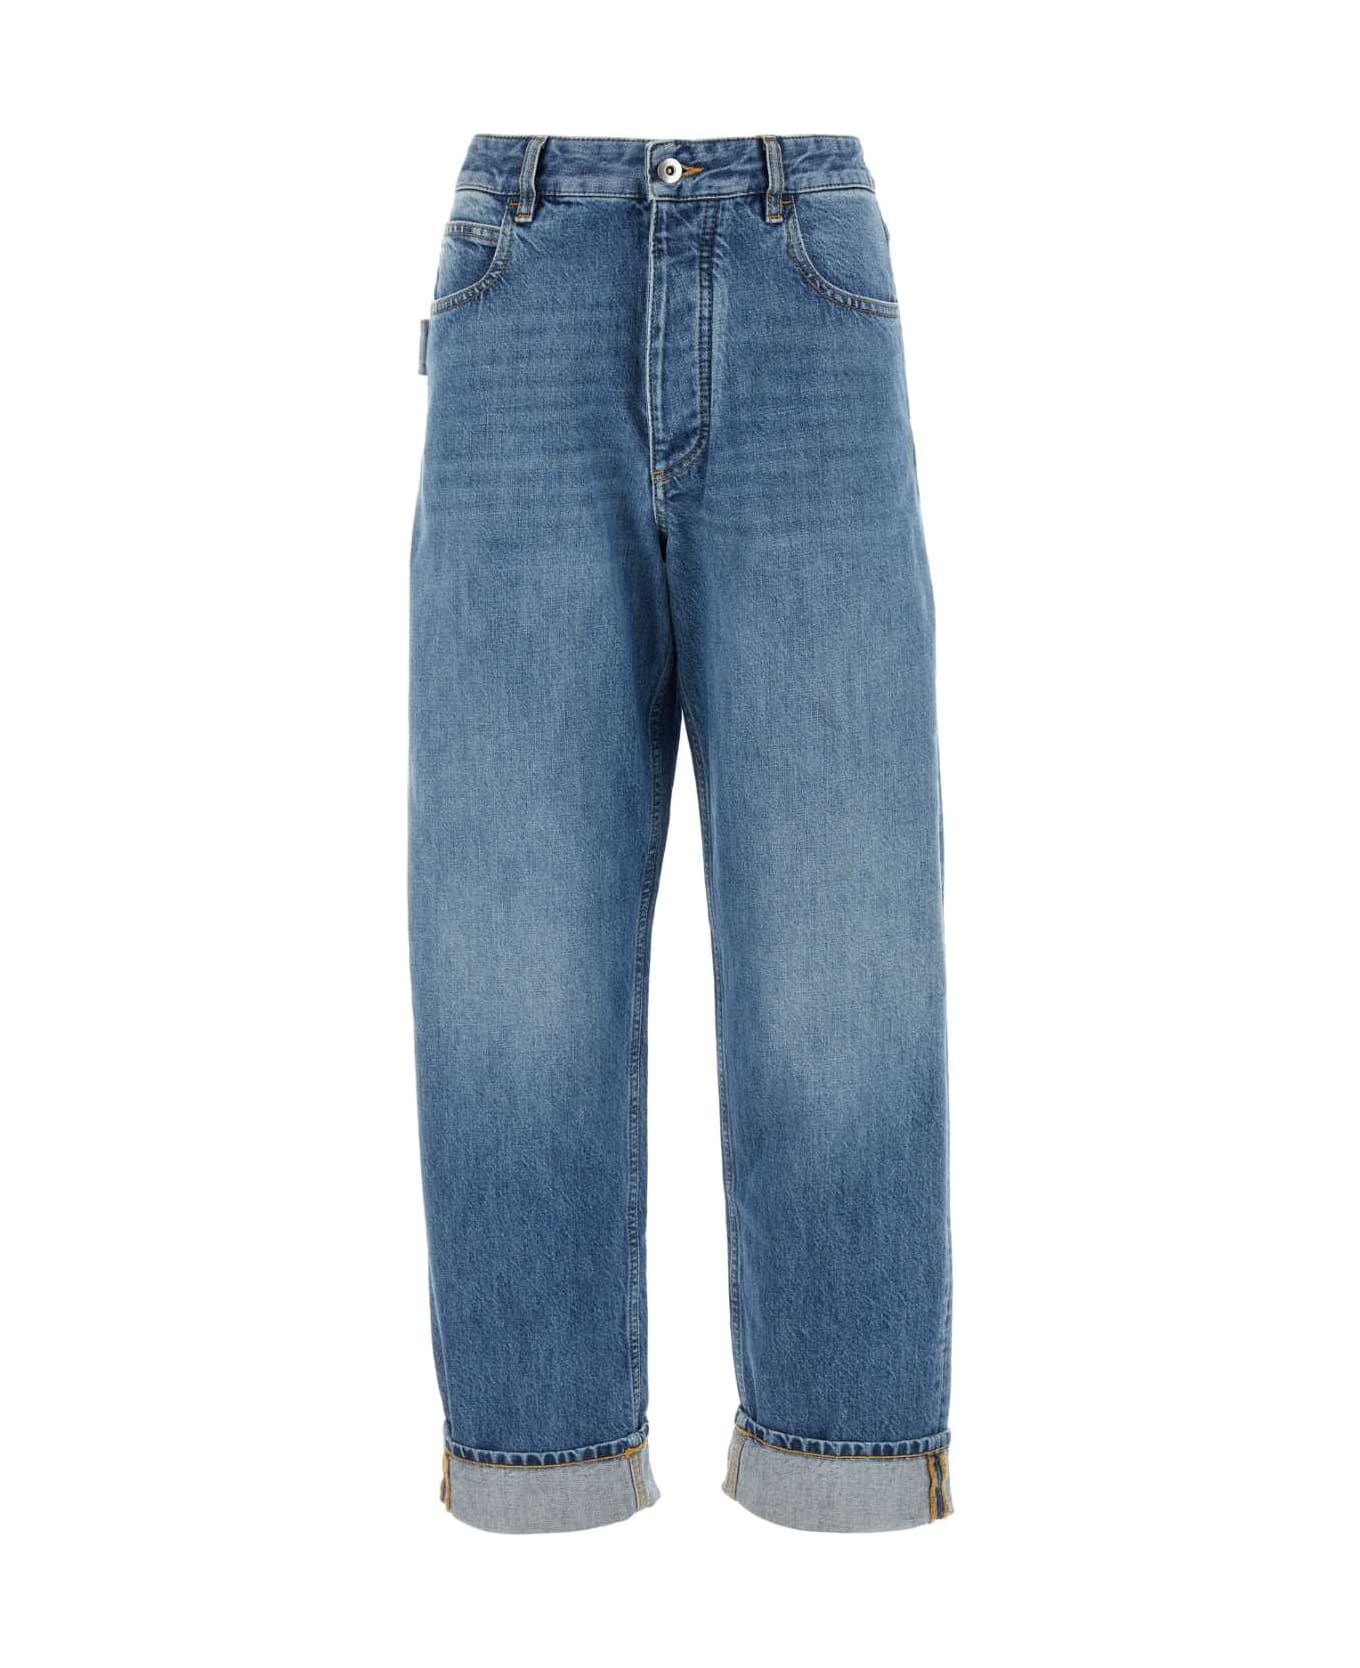 Bottega Veneta Denim Jeans - MIDBLUE